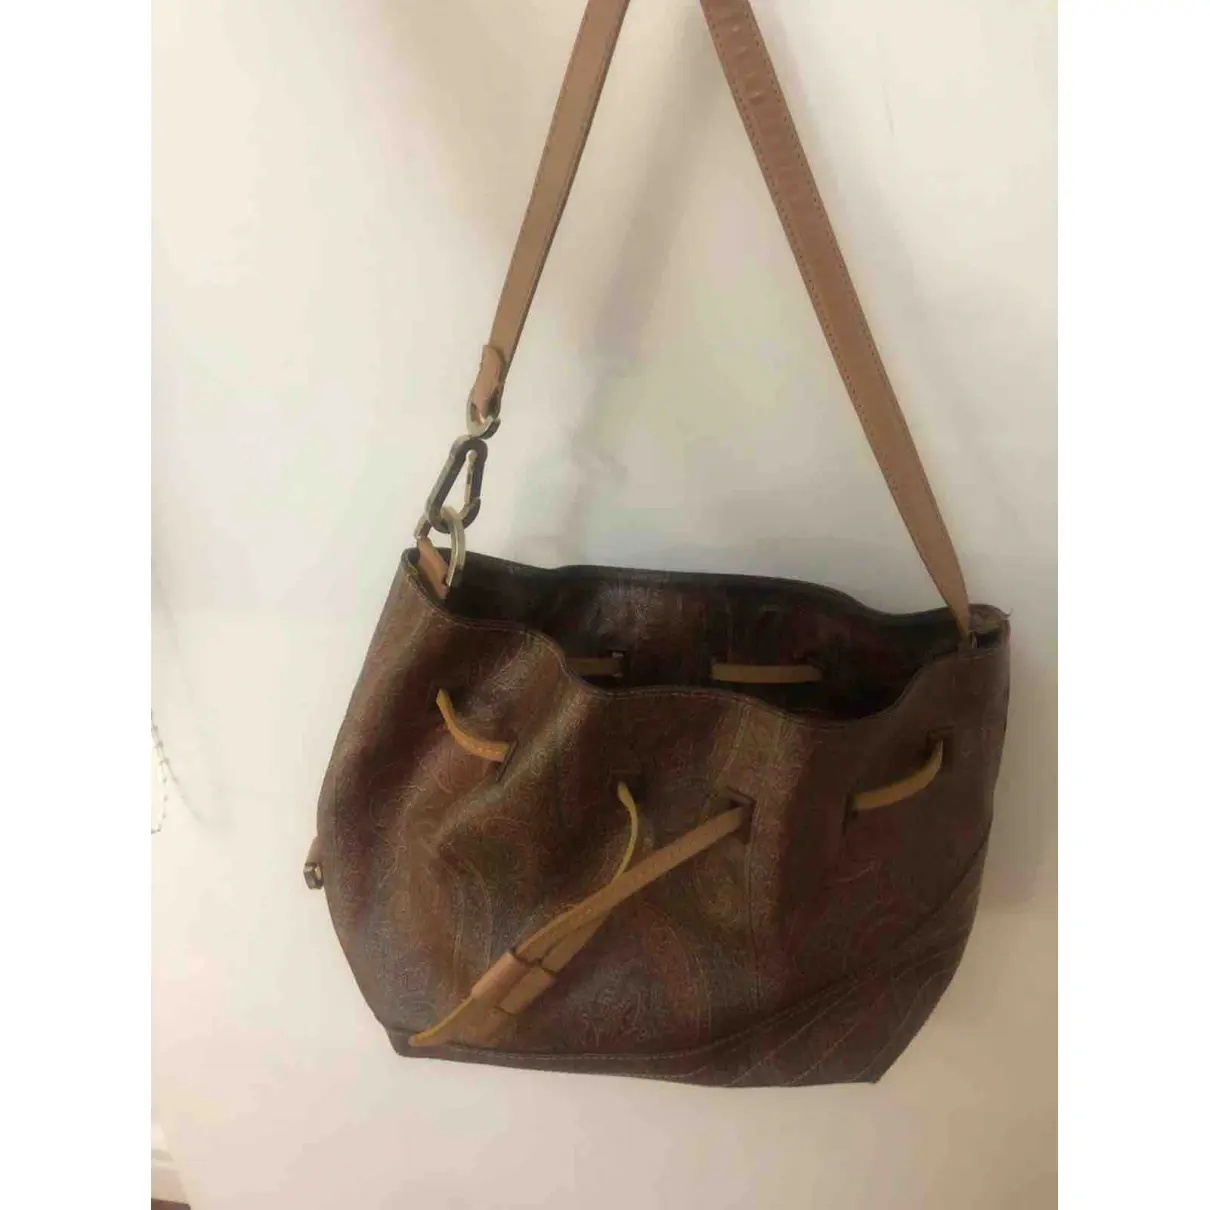 Buy Etro Leather handbag online